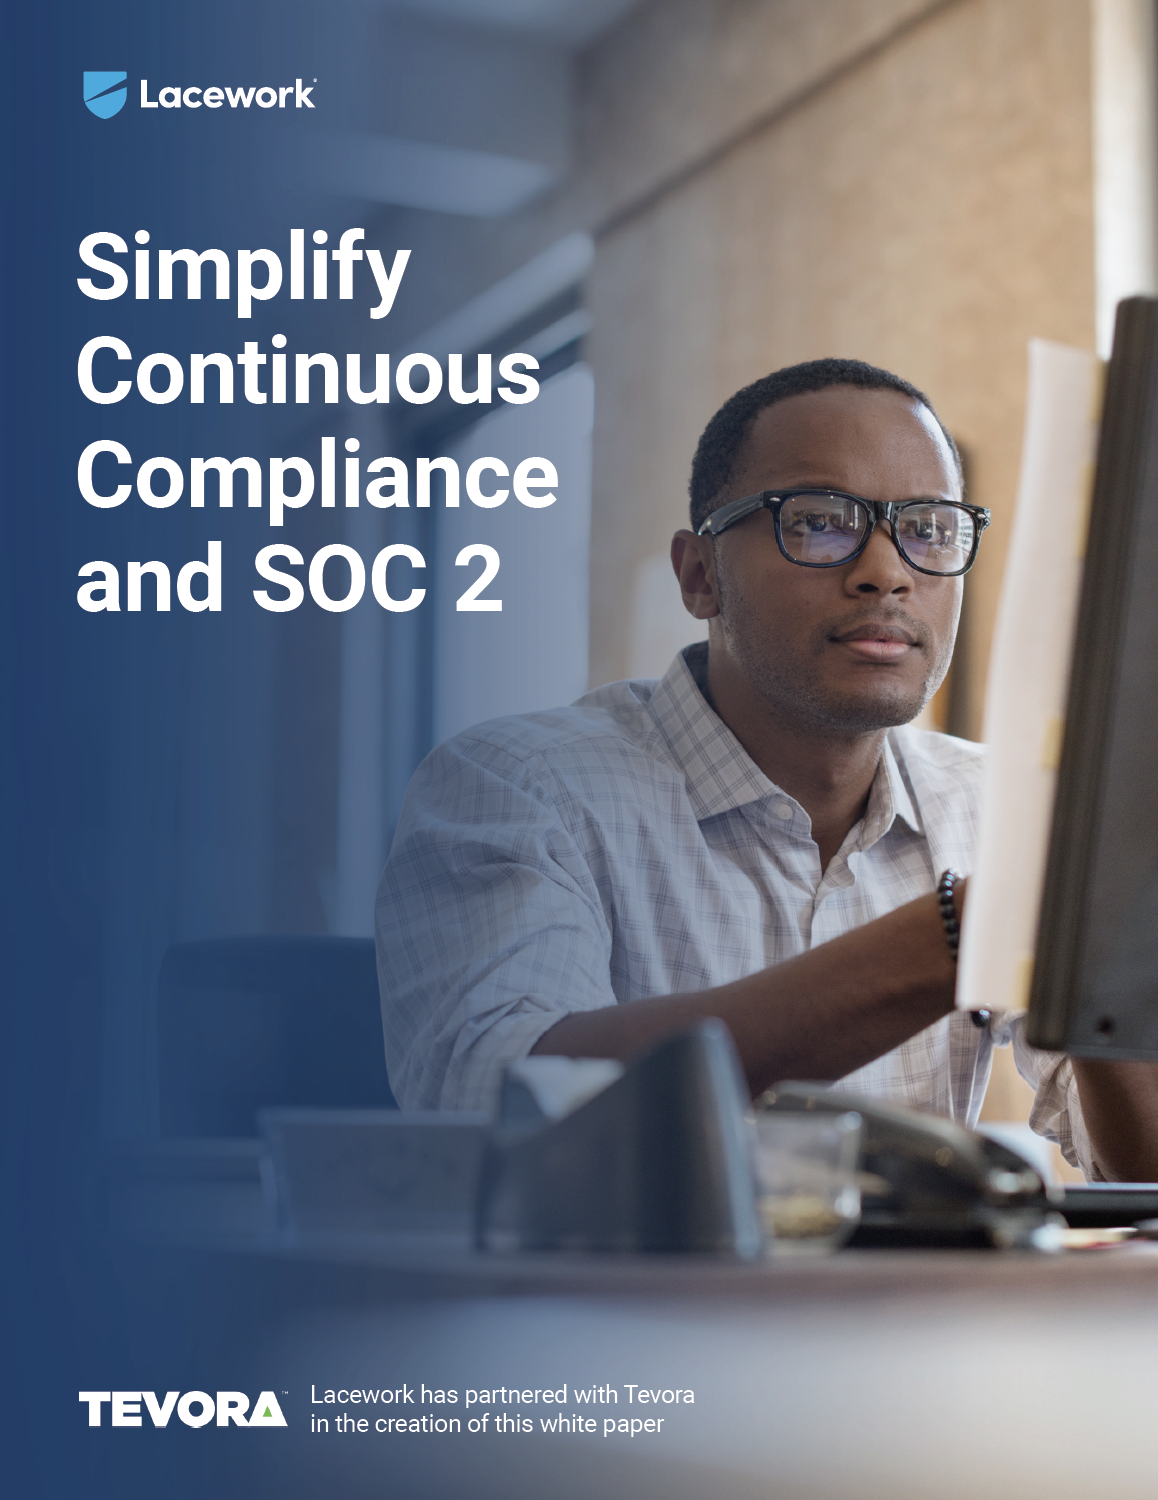 Tevora-Simplify-Continuous-Compliance-SOC2.png